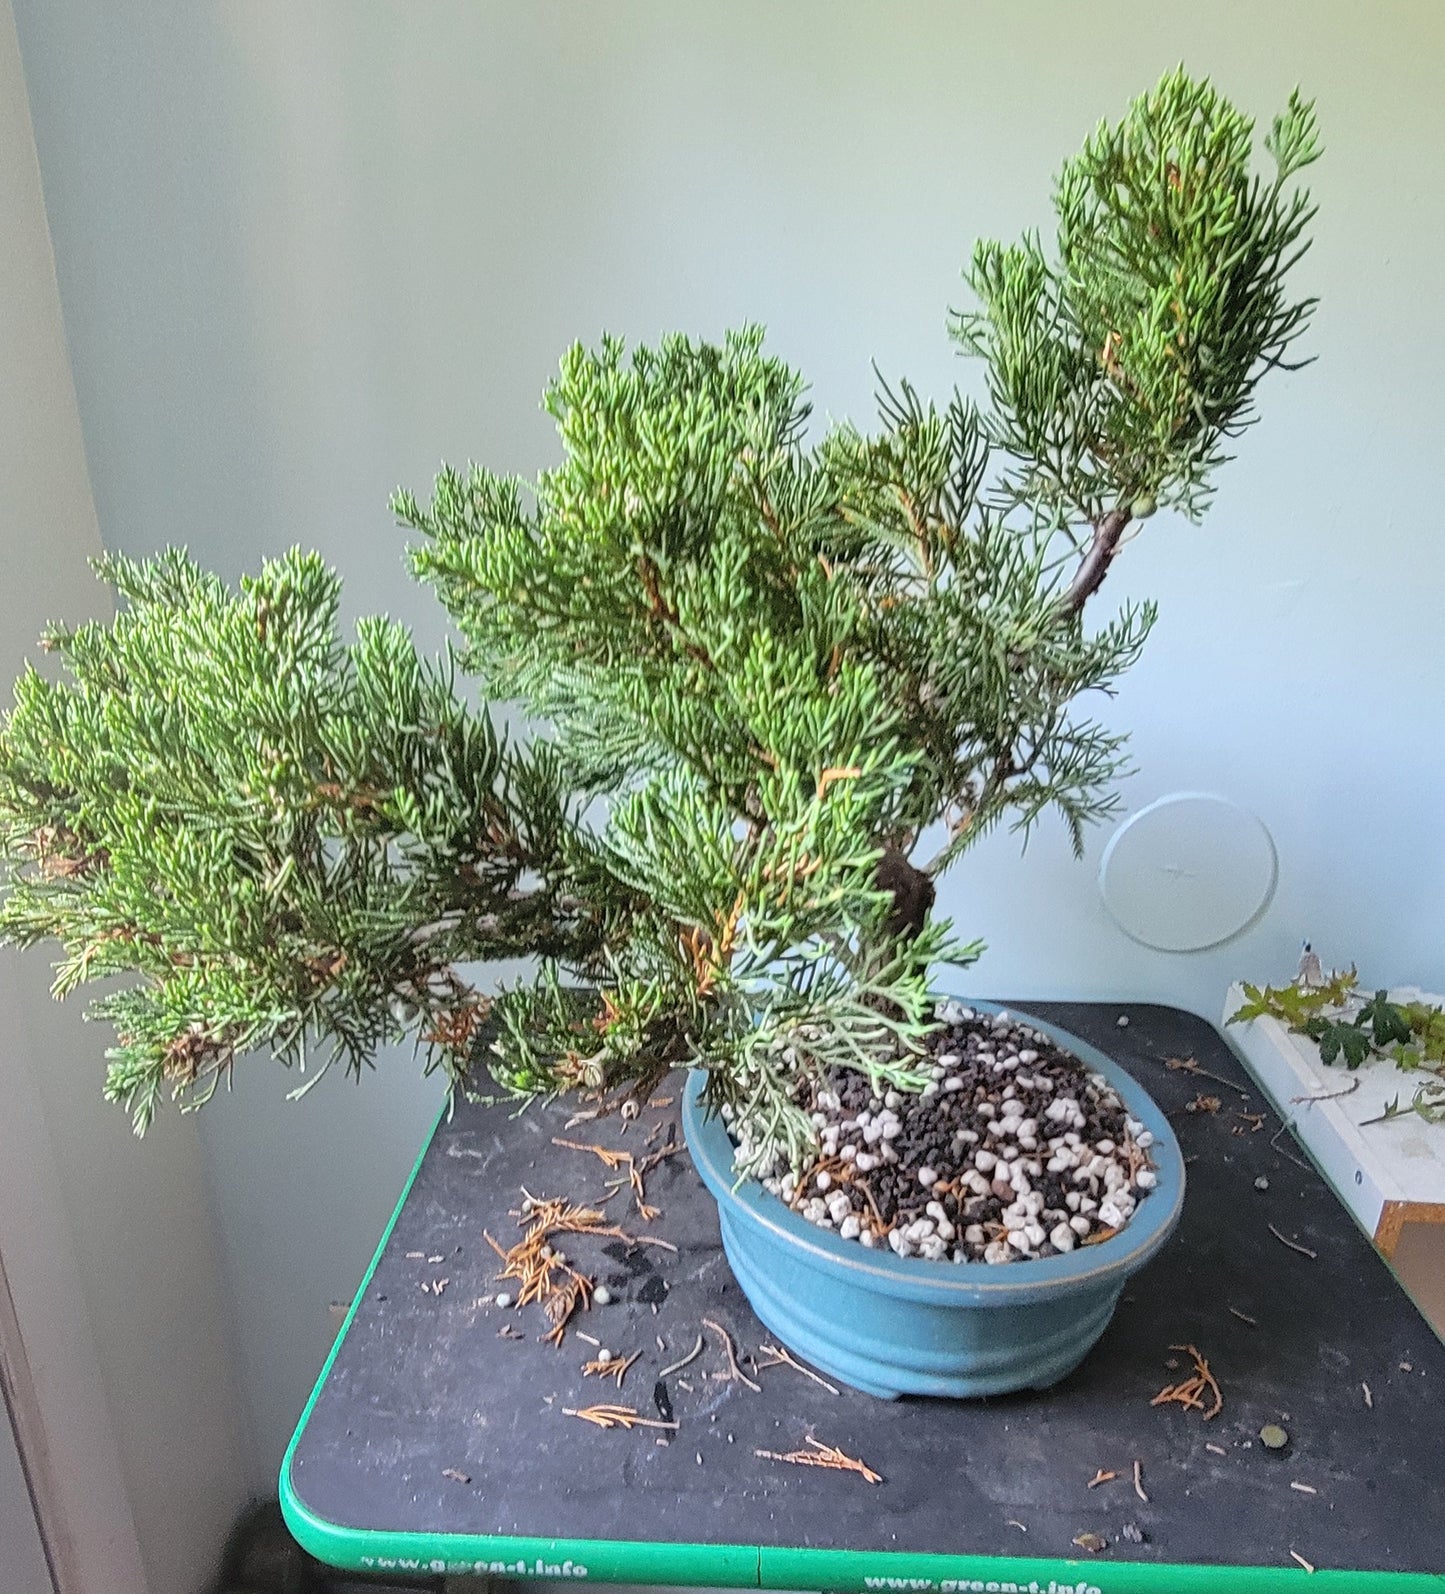 Juniperus Chinensis v. Parsonii pre-bonsai